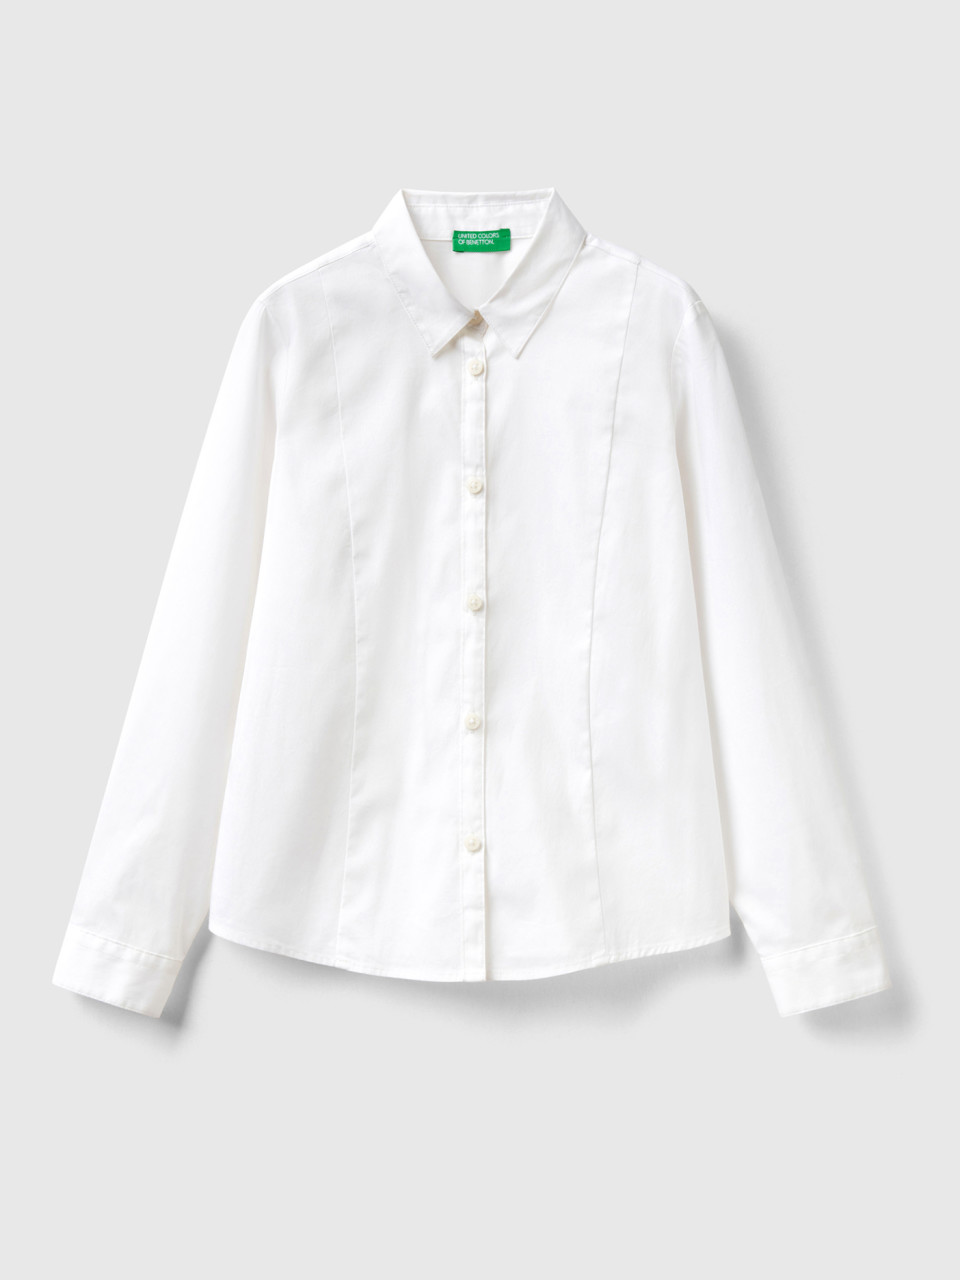 Benetton, White Shirt In Stretch Cotton Blend, White, Kids